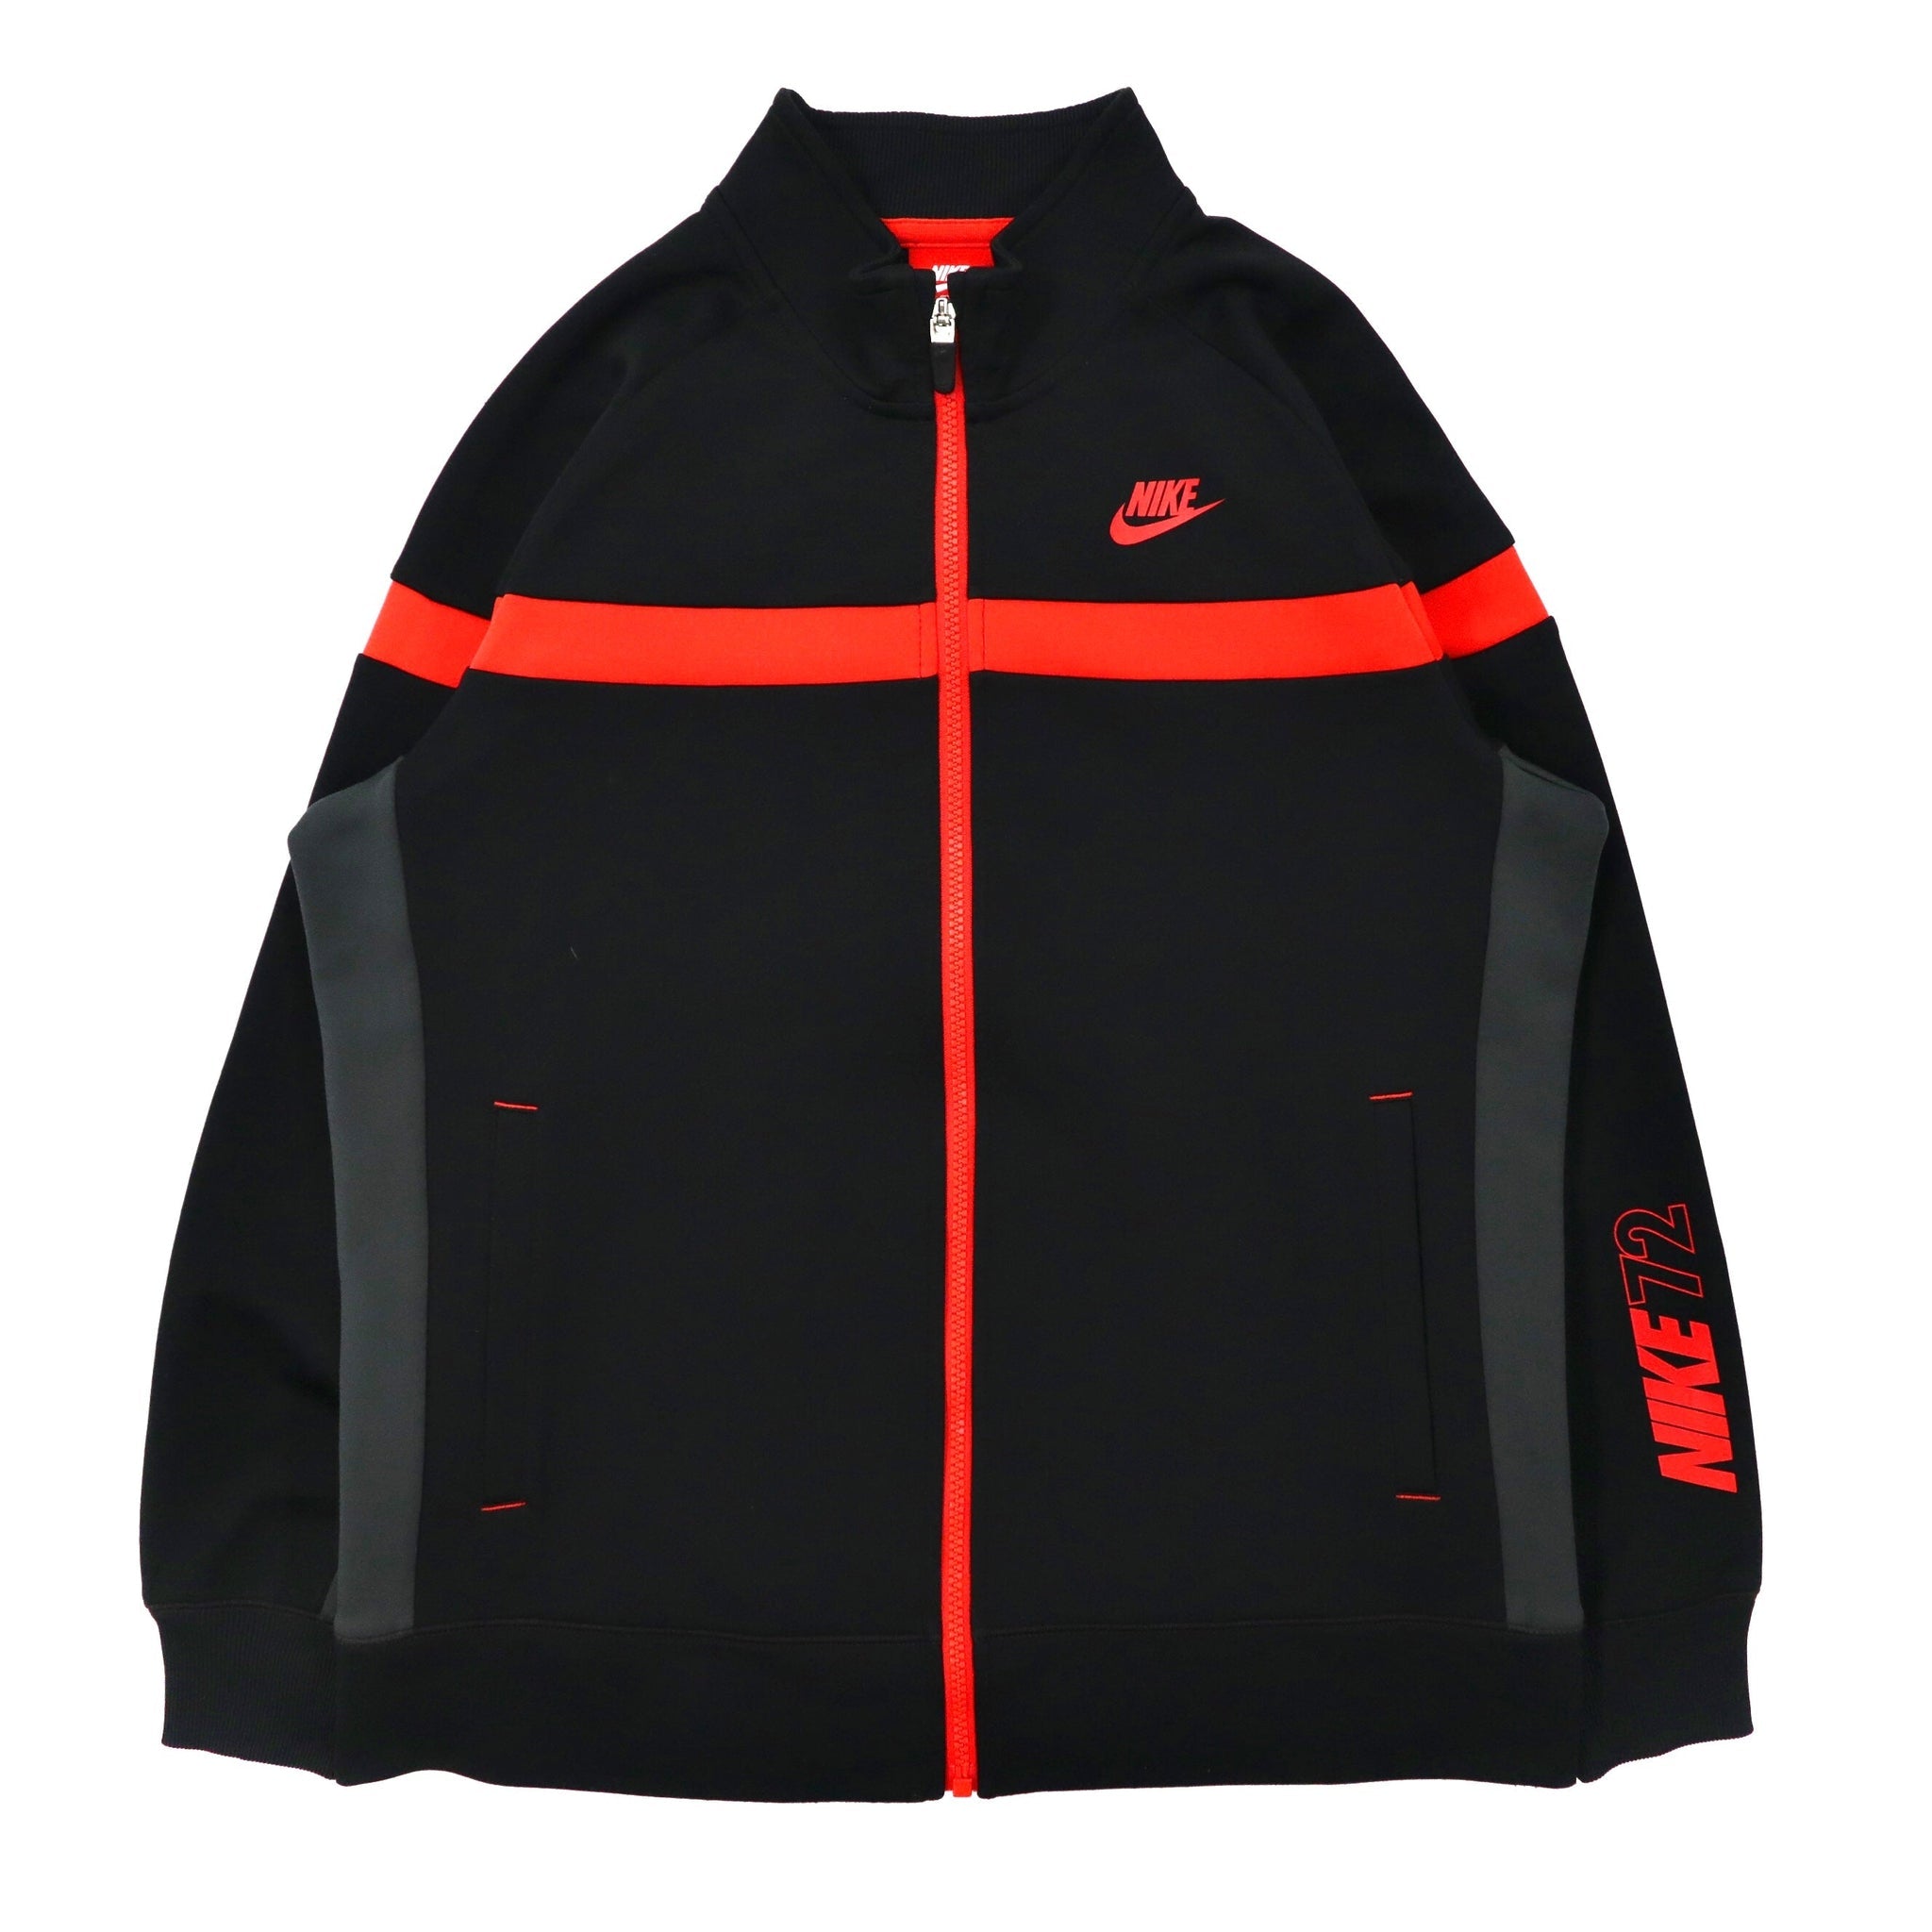 Nike Track Jacket L Black polyester Nike72 Futura Track Jacket 